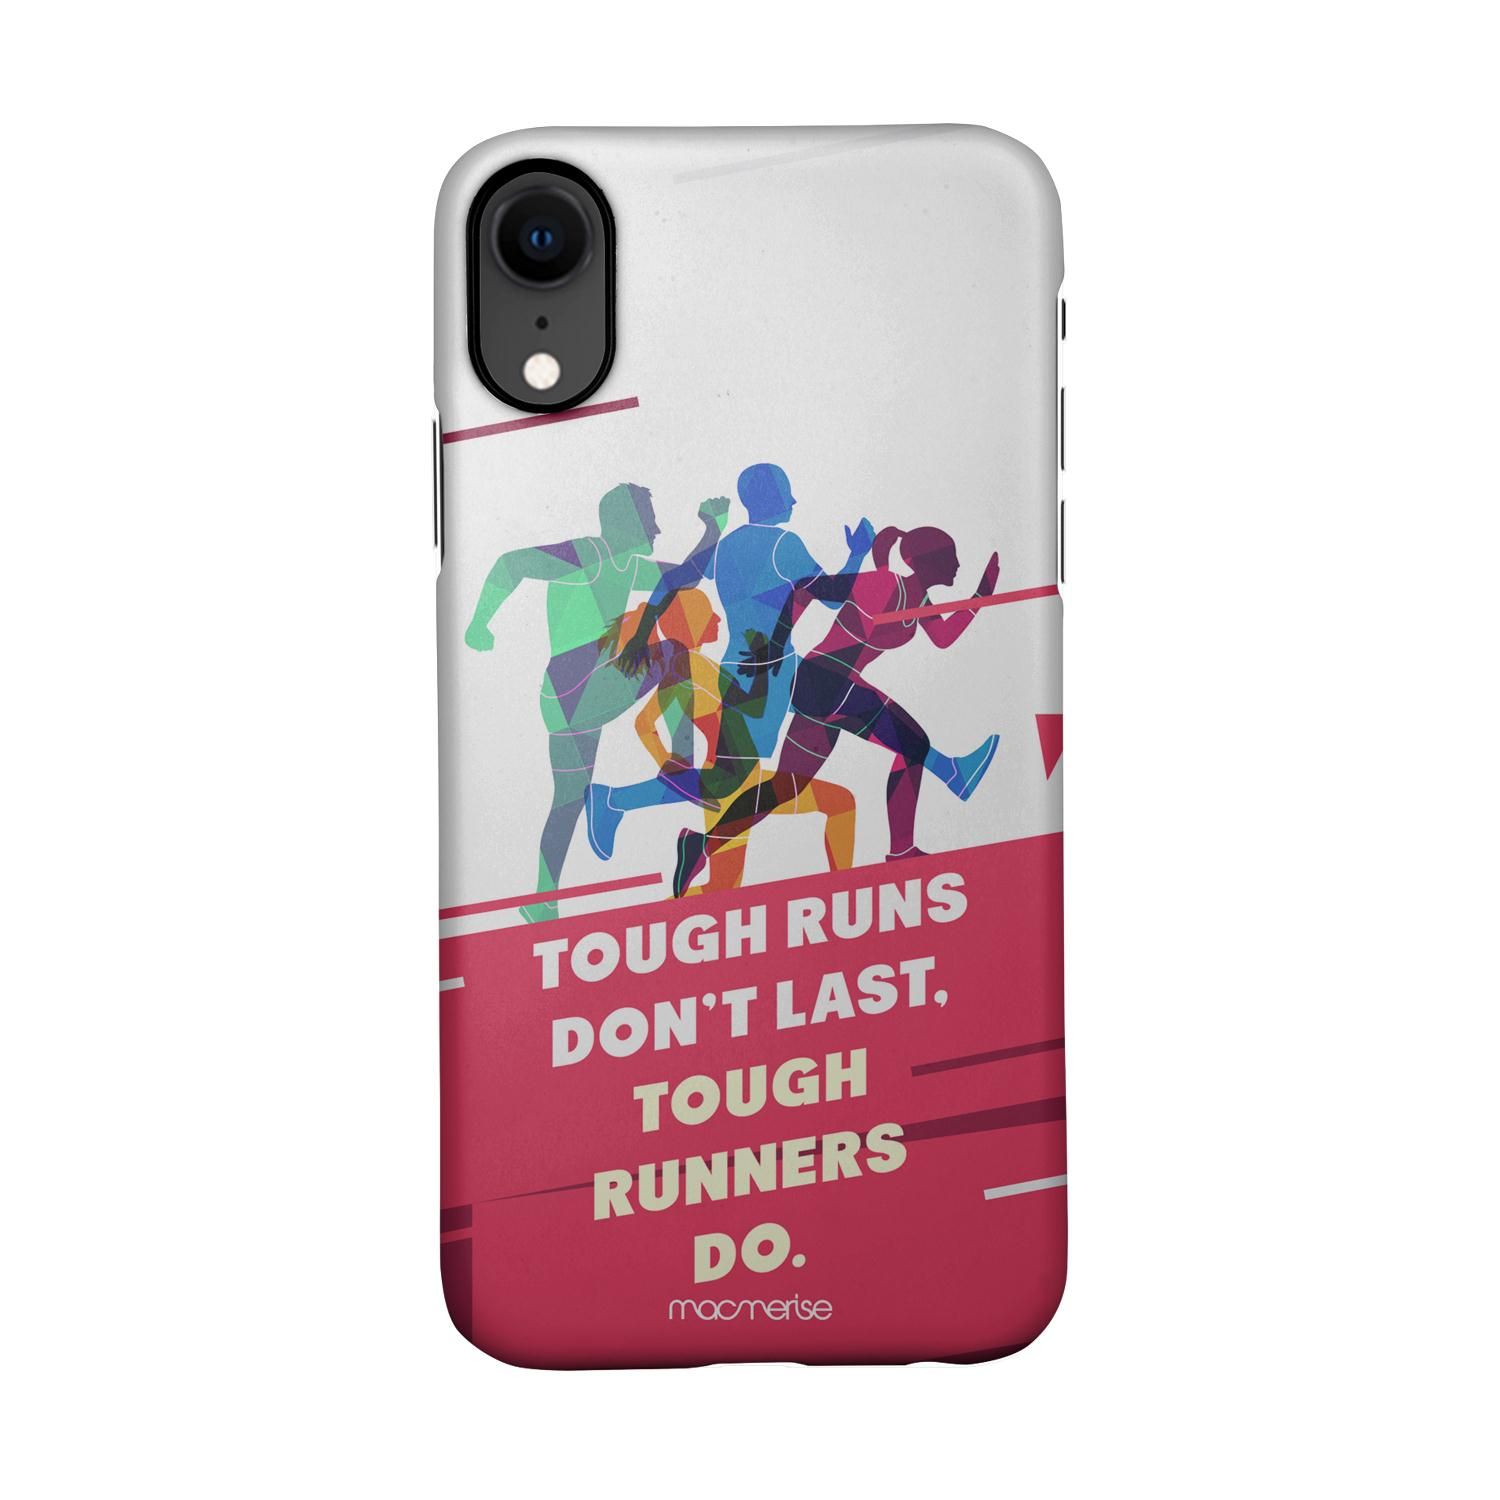 Buy Tough Runners - Sleek Phone Case for iPhone XR Online